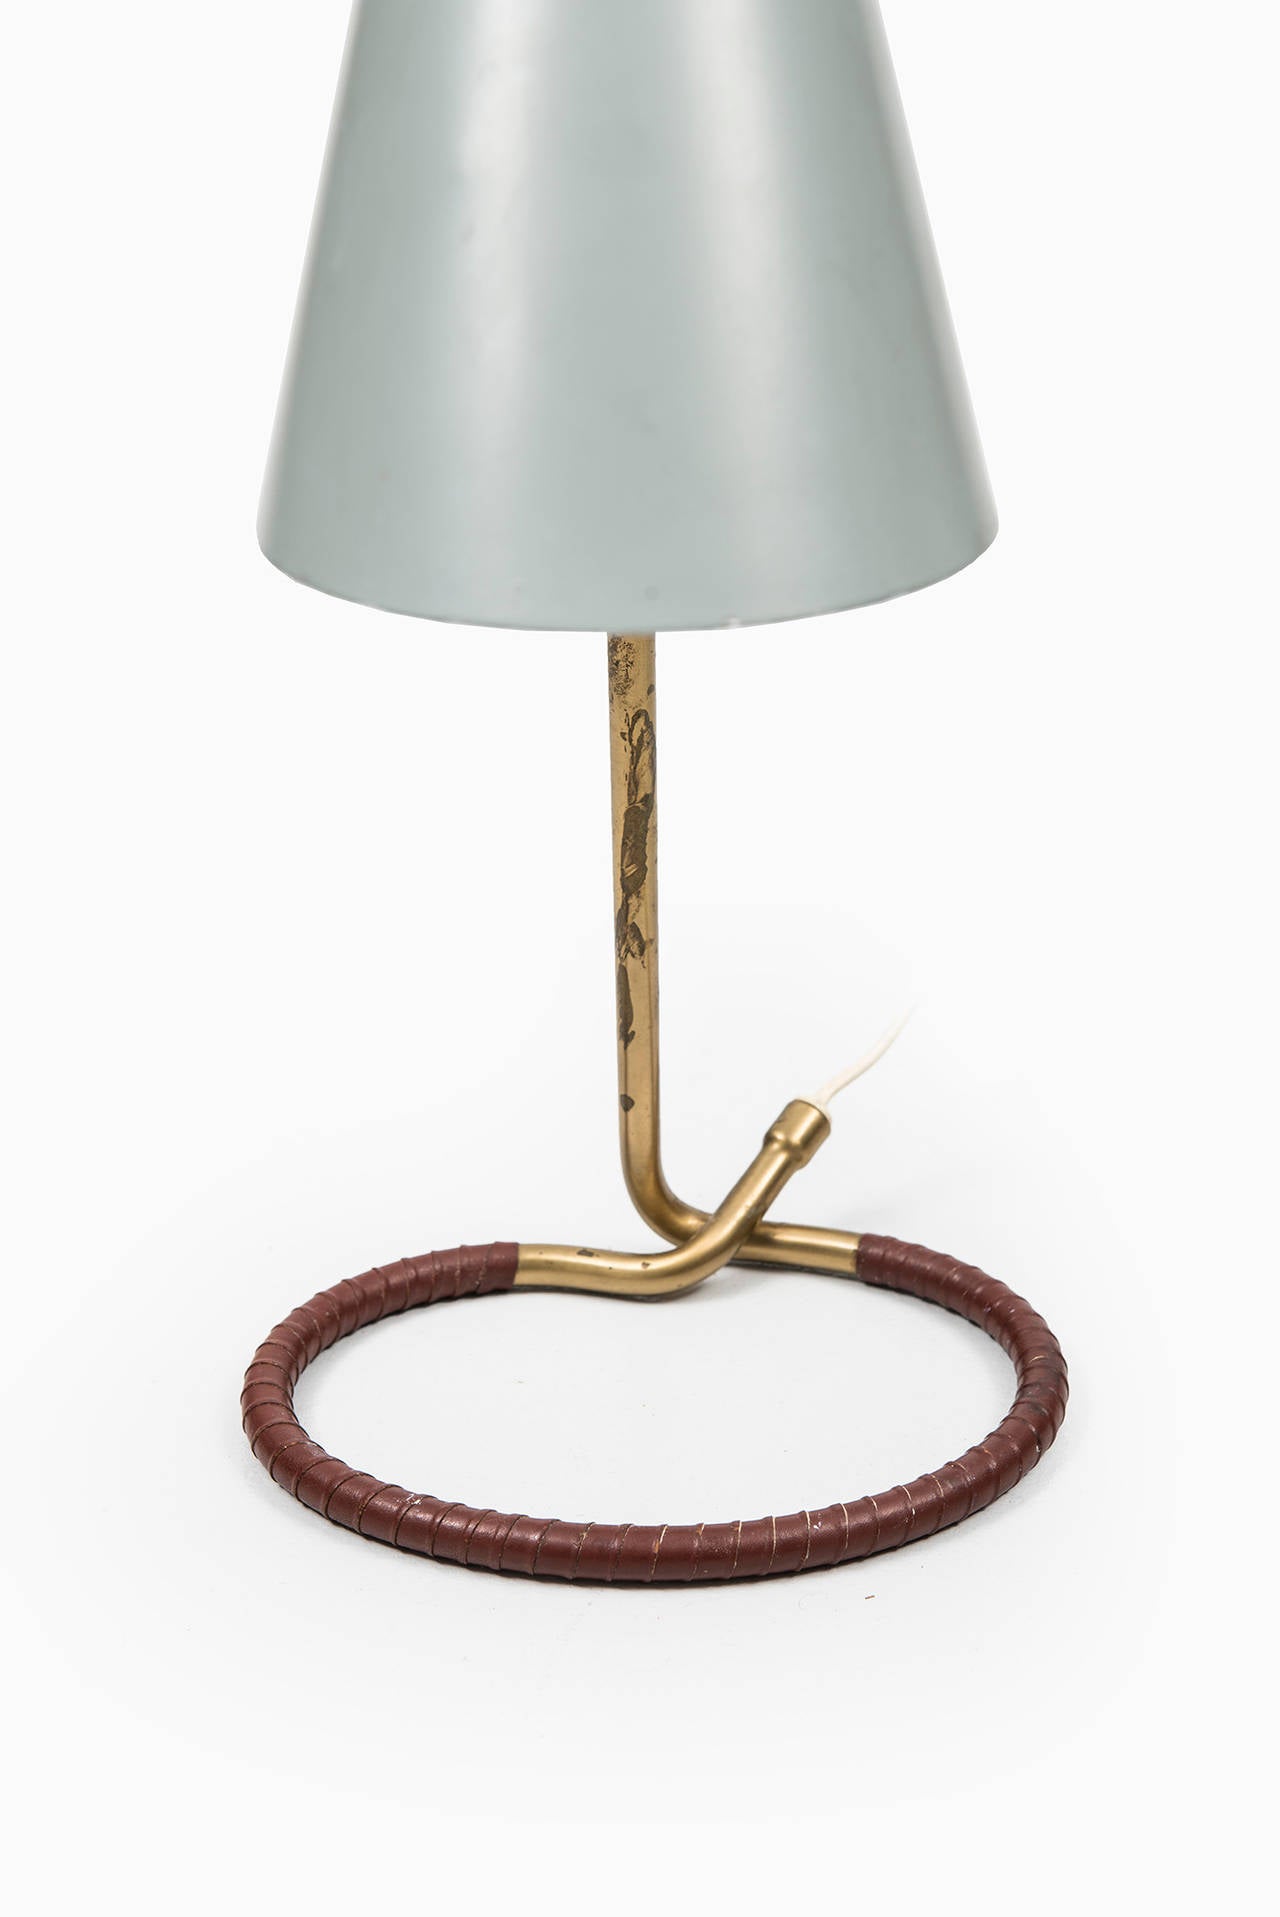 Mid-Century Modern Hans Bergström Table Lamp Model No. 711 by Ateljé Lyktan in Åhus, Sweden